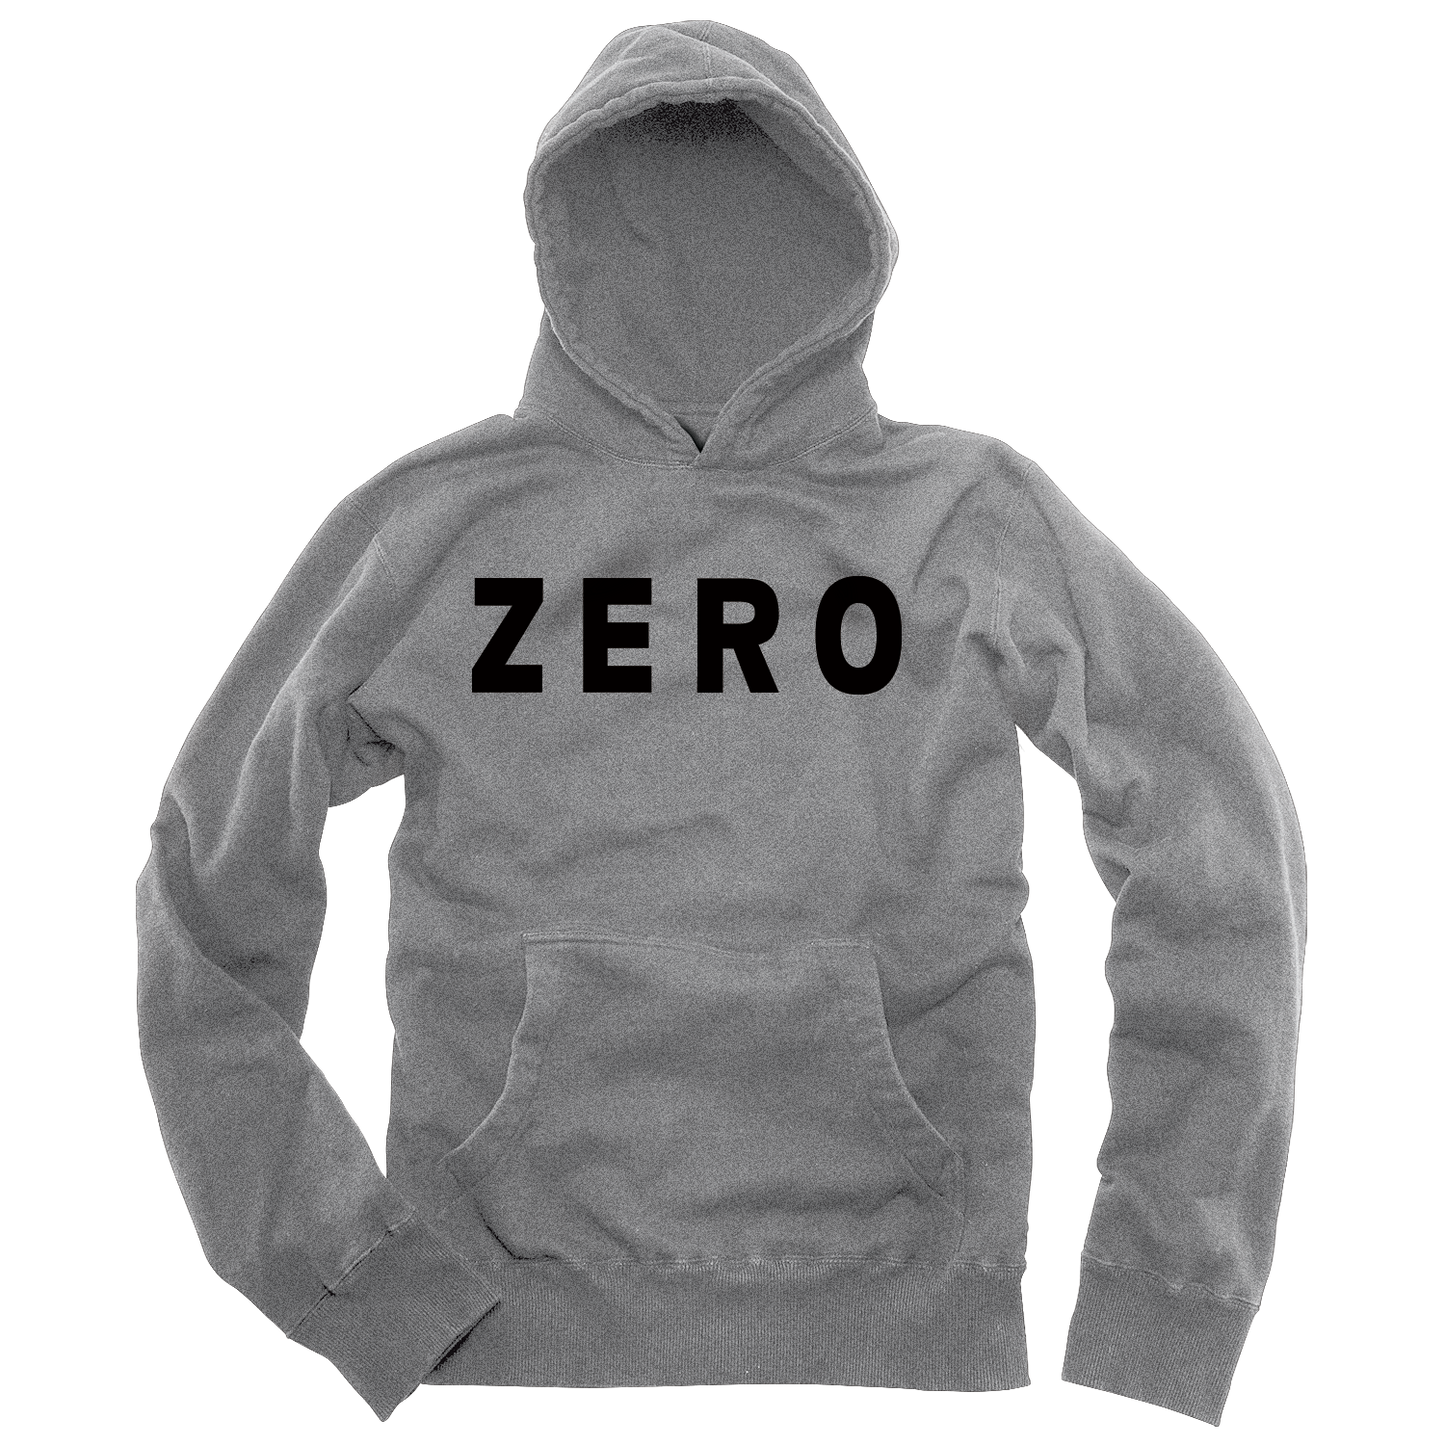 Zero Army gray and black fleece pullover